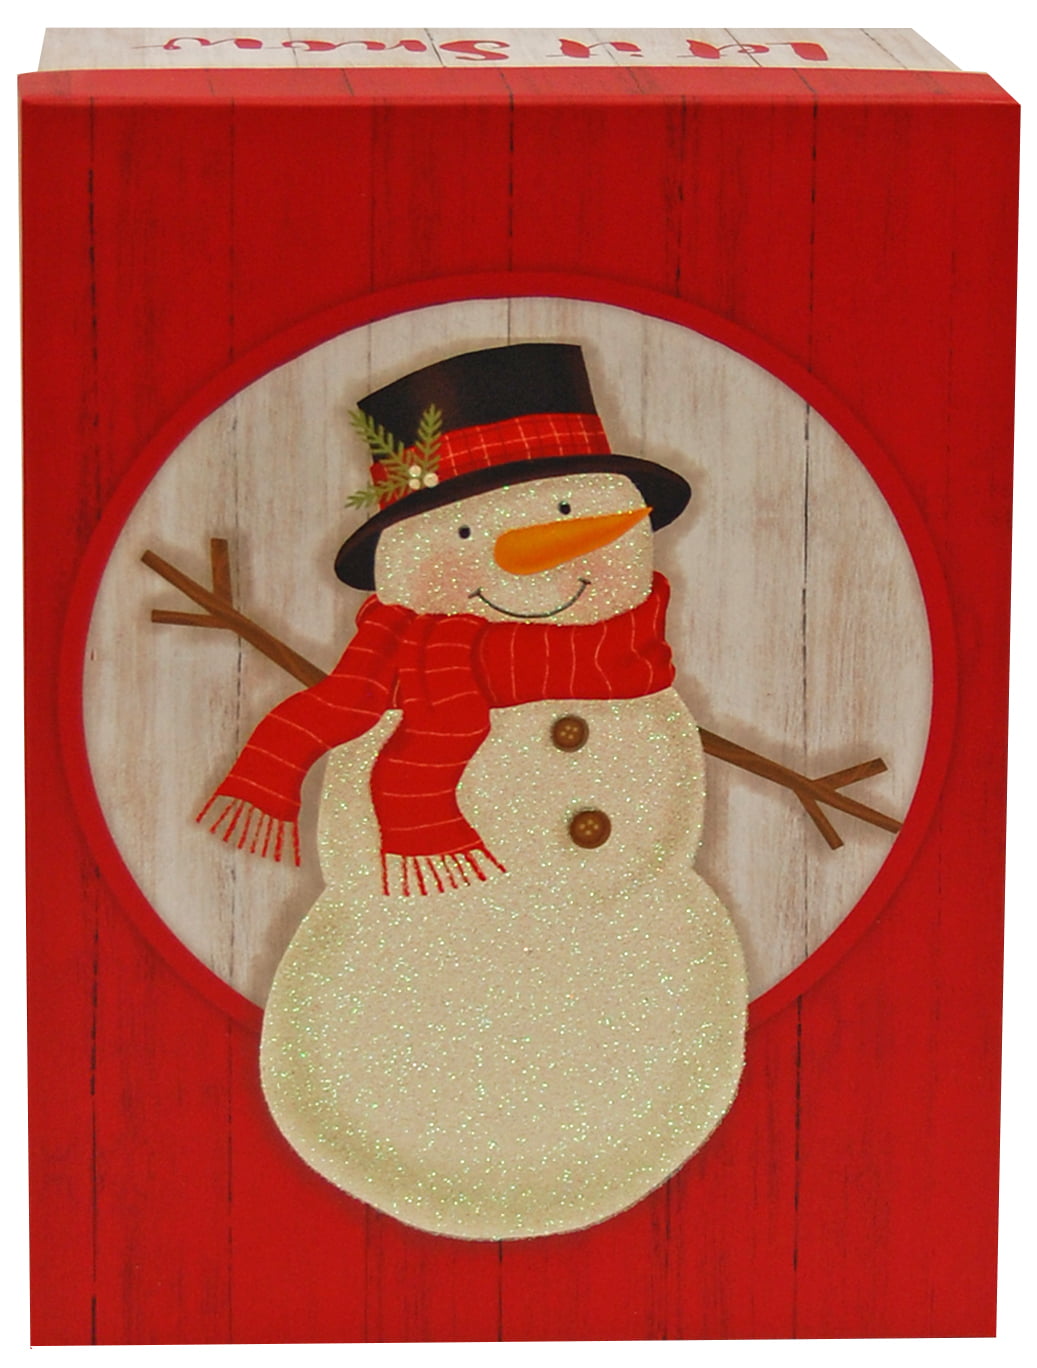 127x178cm Each Sheet Cnady Canes Snowman Red Stripes Rustic Christmas Santa Claus Christmas Wrapping Paper Bundle Christmas Tree Moose Polka Dots for Christmas 10 Sheets Snowflake 